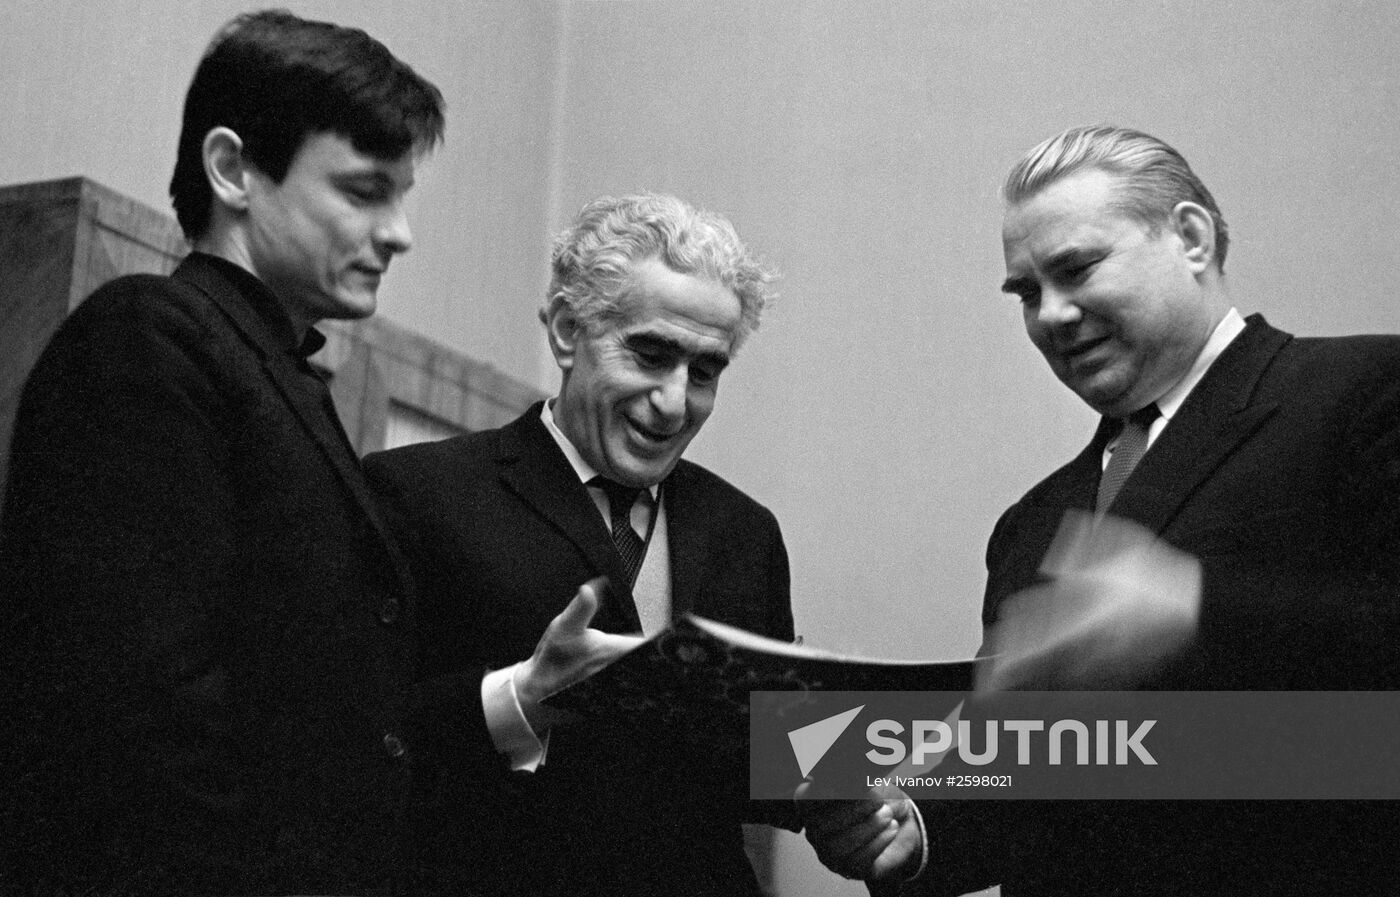 Soviet film directors